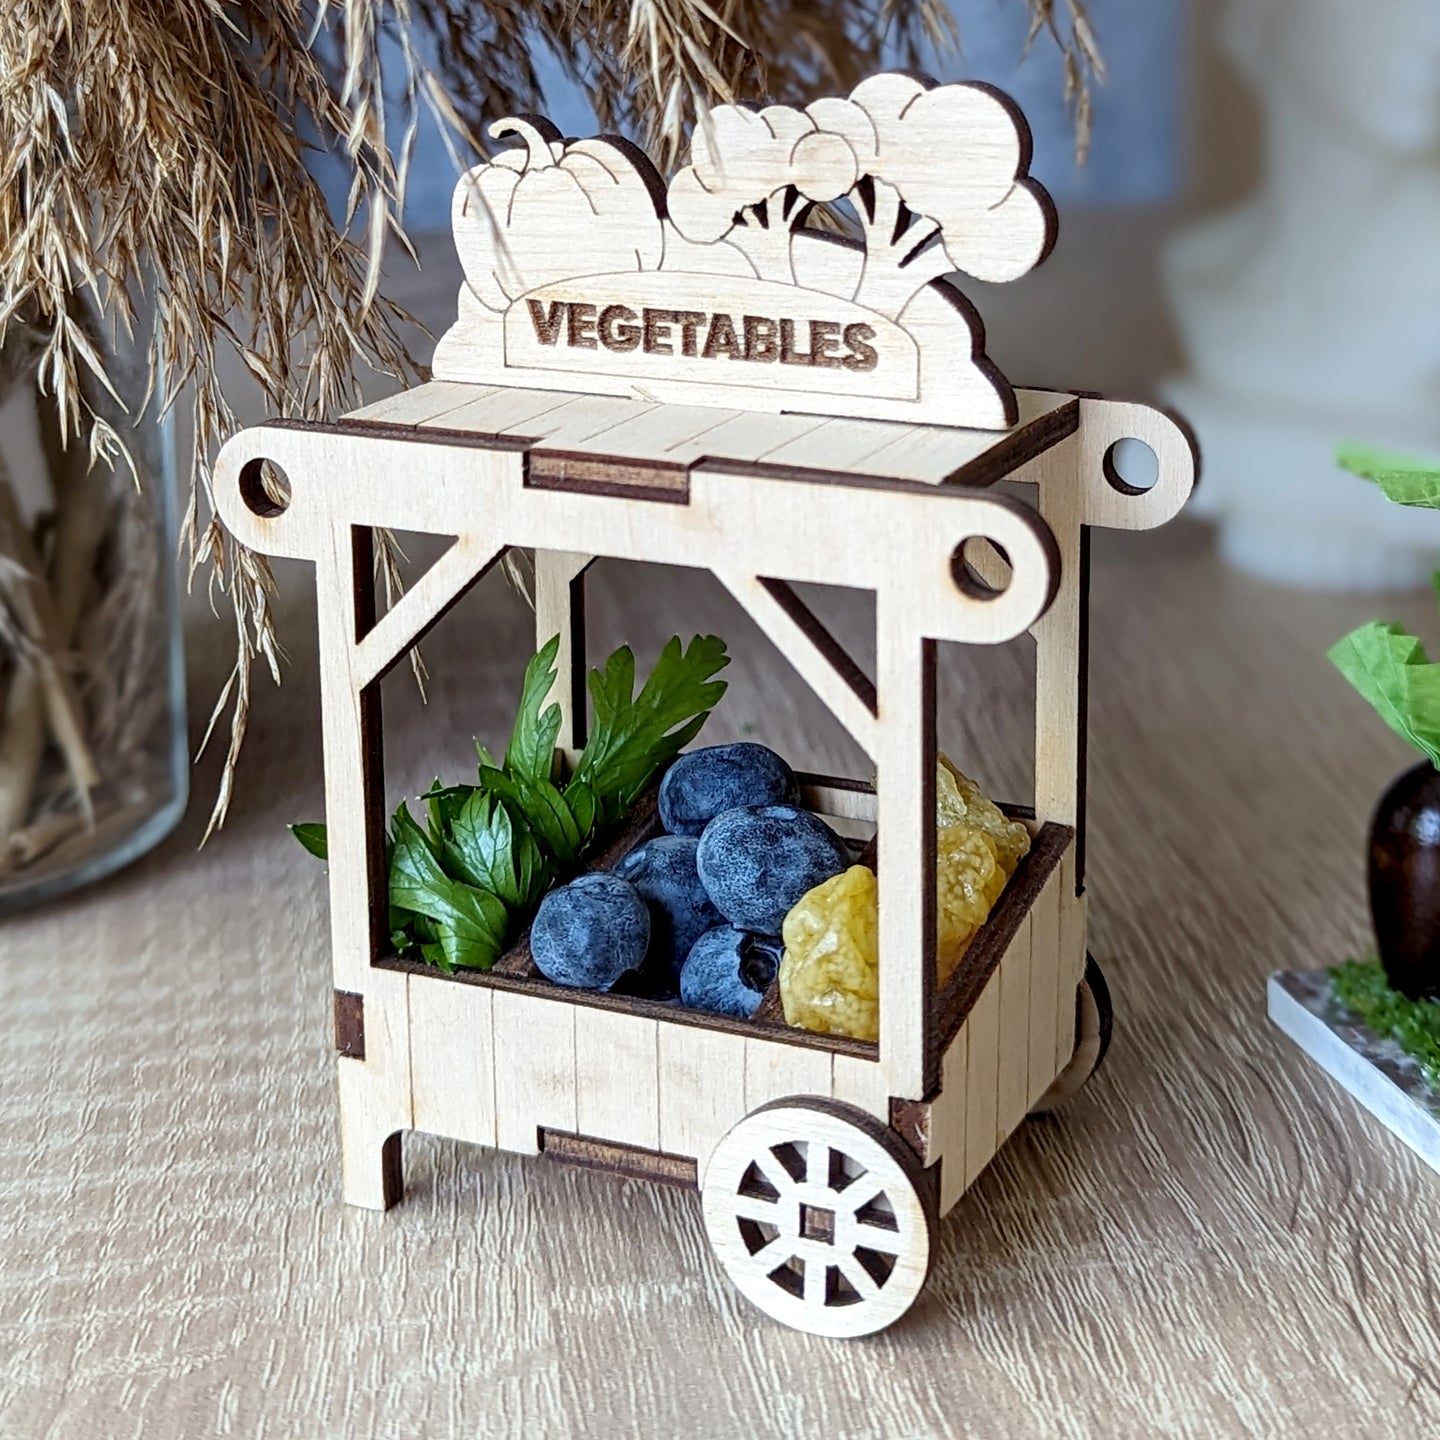 Vegetables Wagon Ornament & Miniature